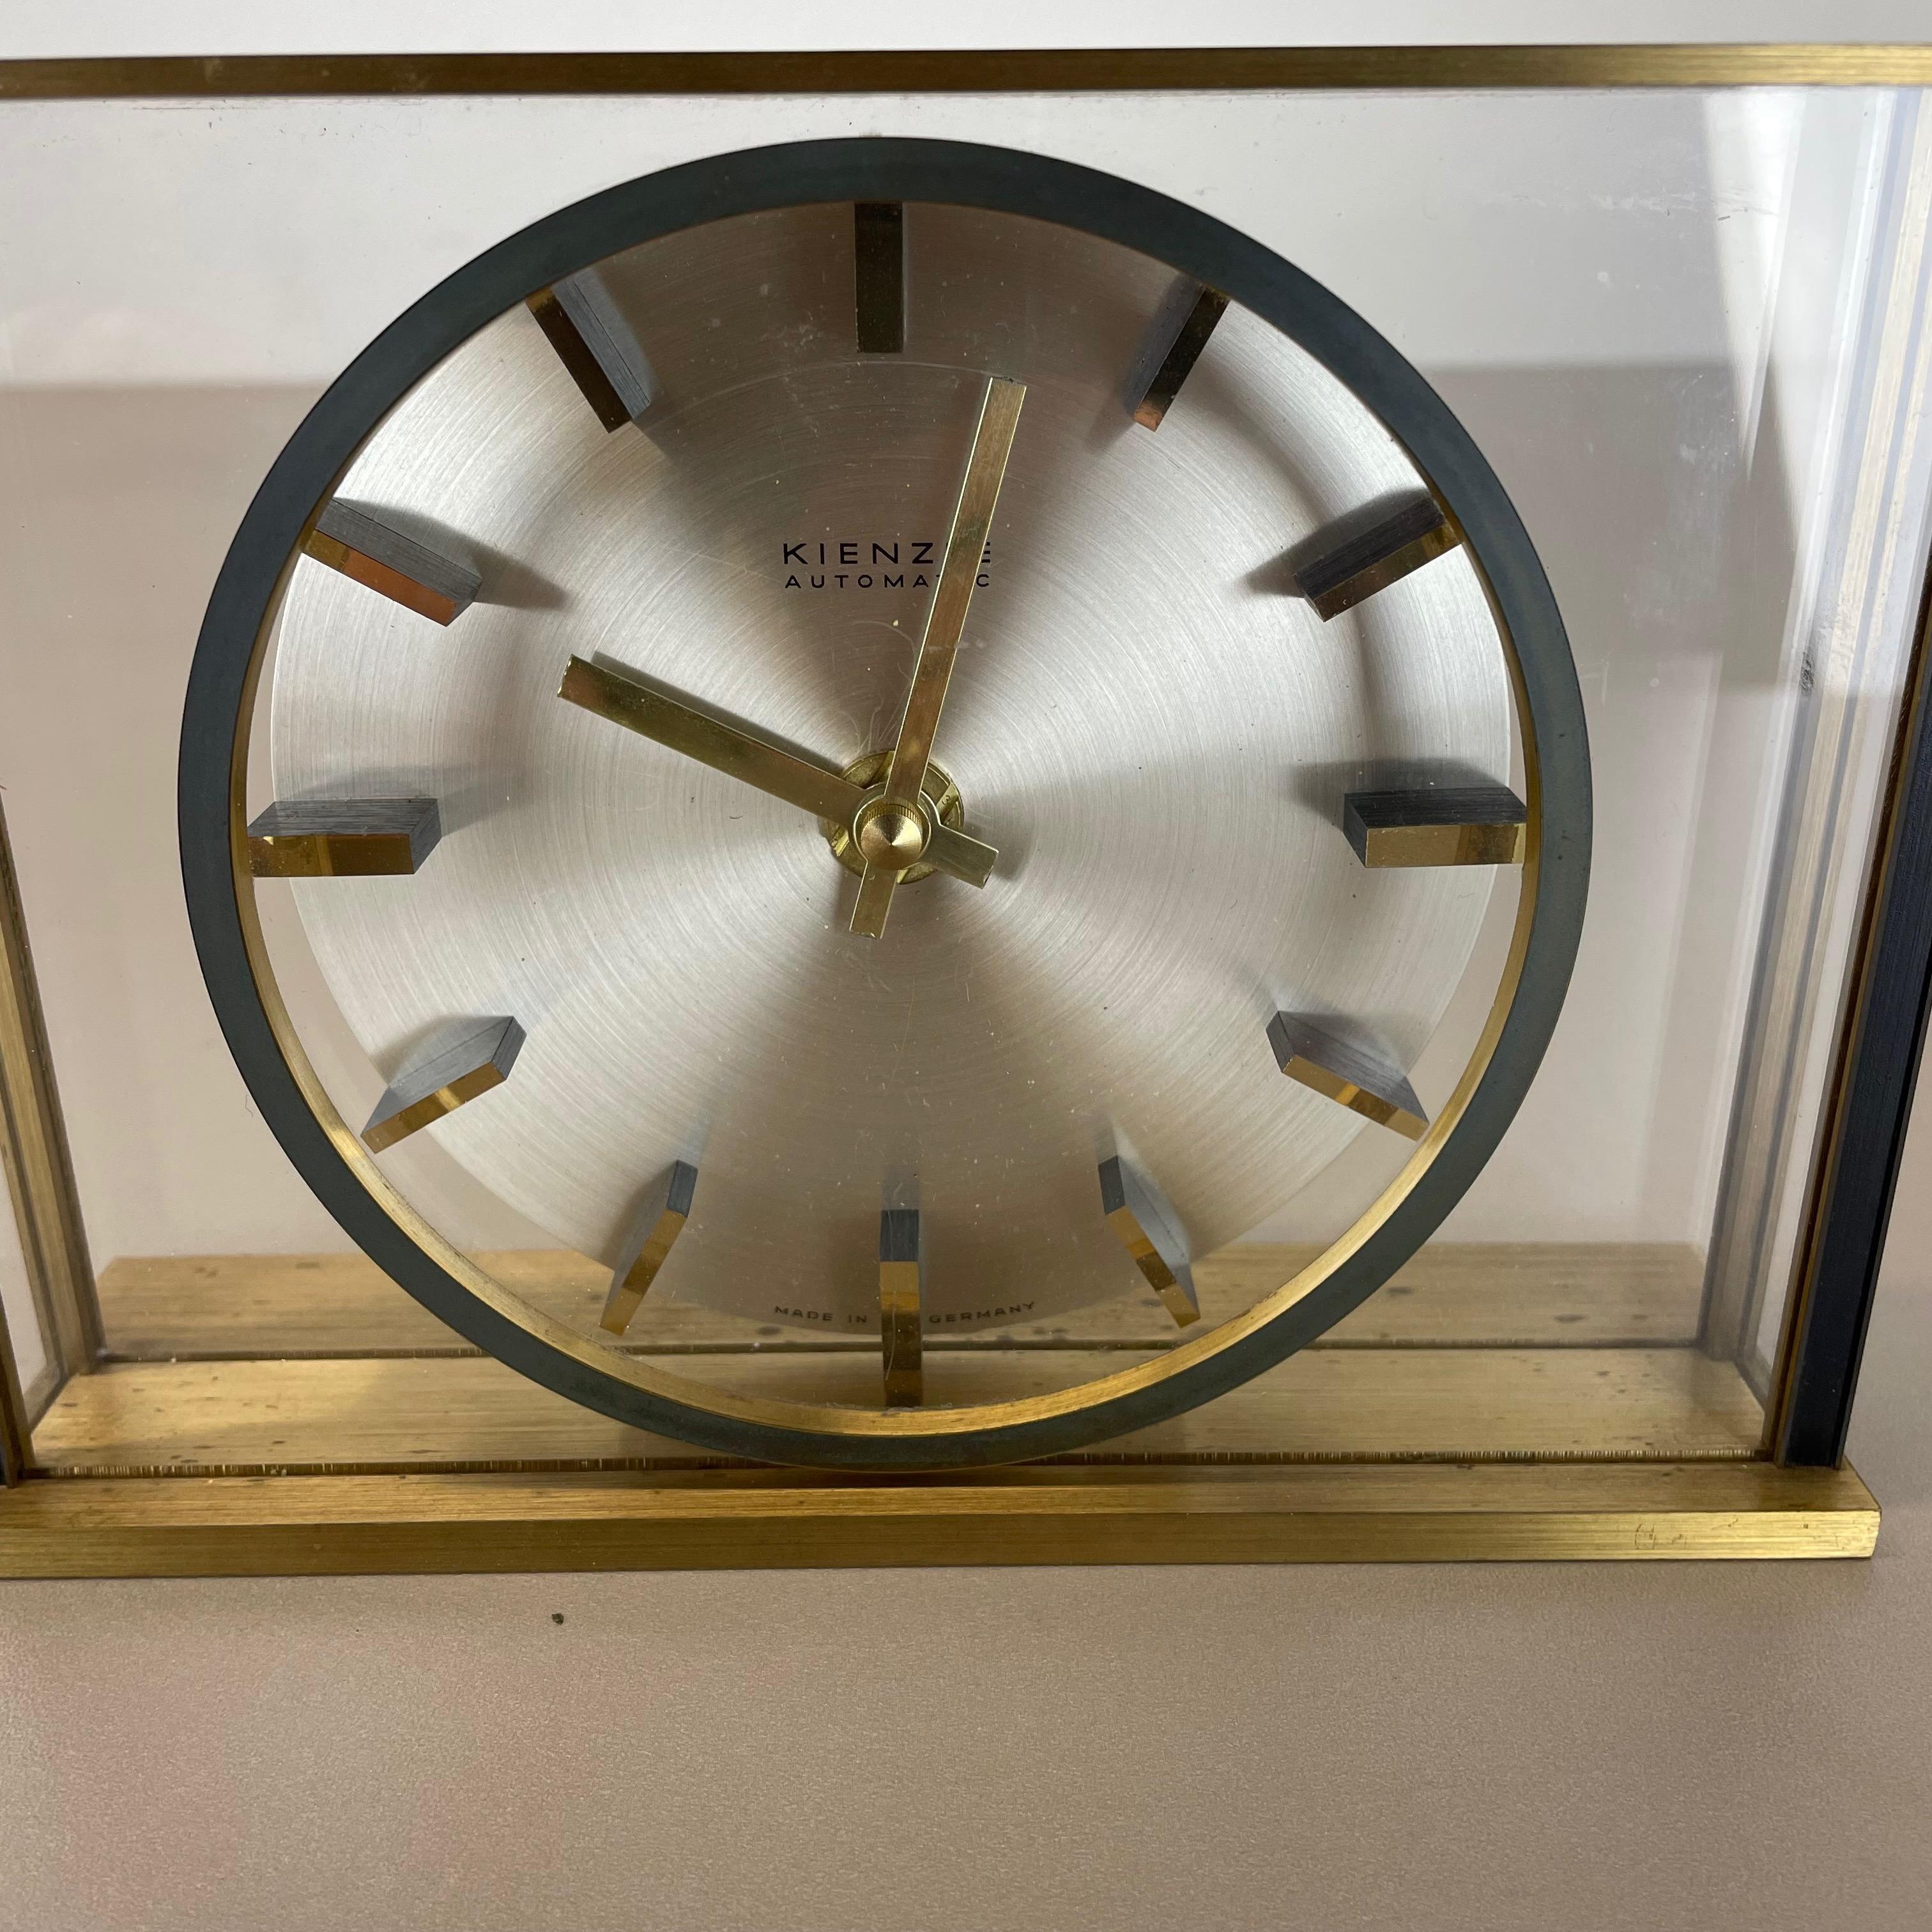 Vintage Hollywood Regency Brass Glass Table Clock by Kienzle, Germany 1970s For Sale 3